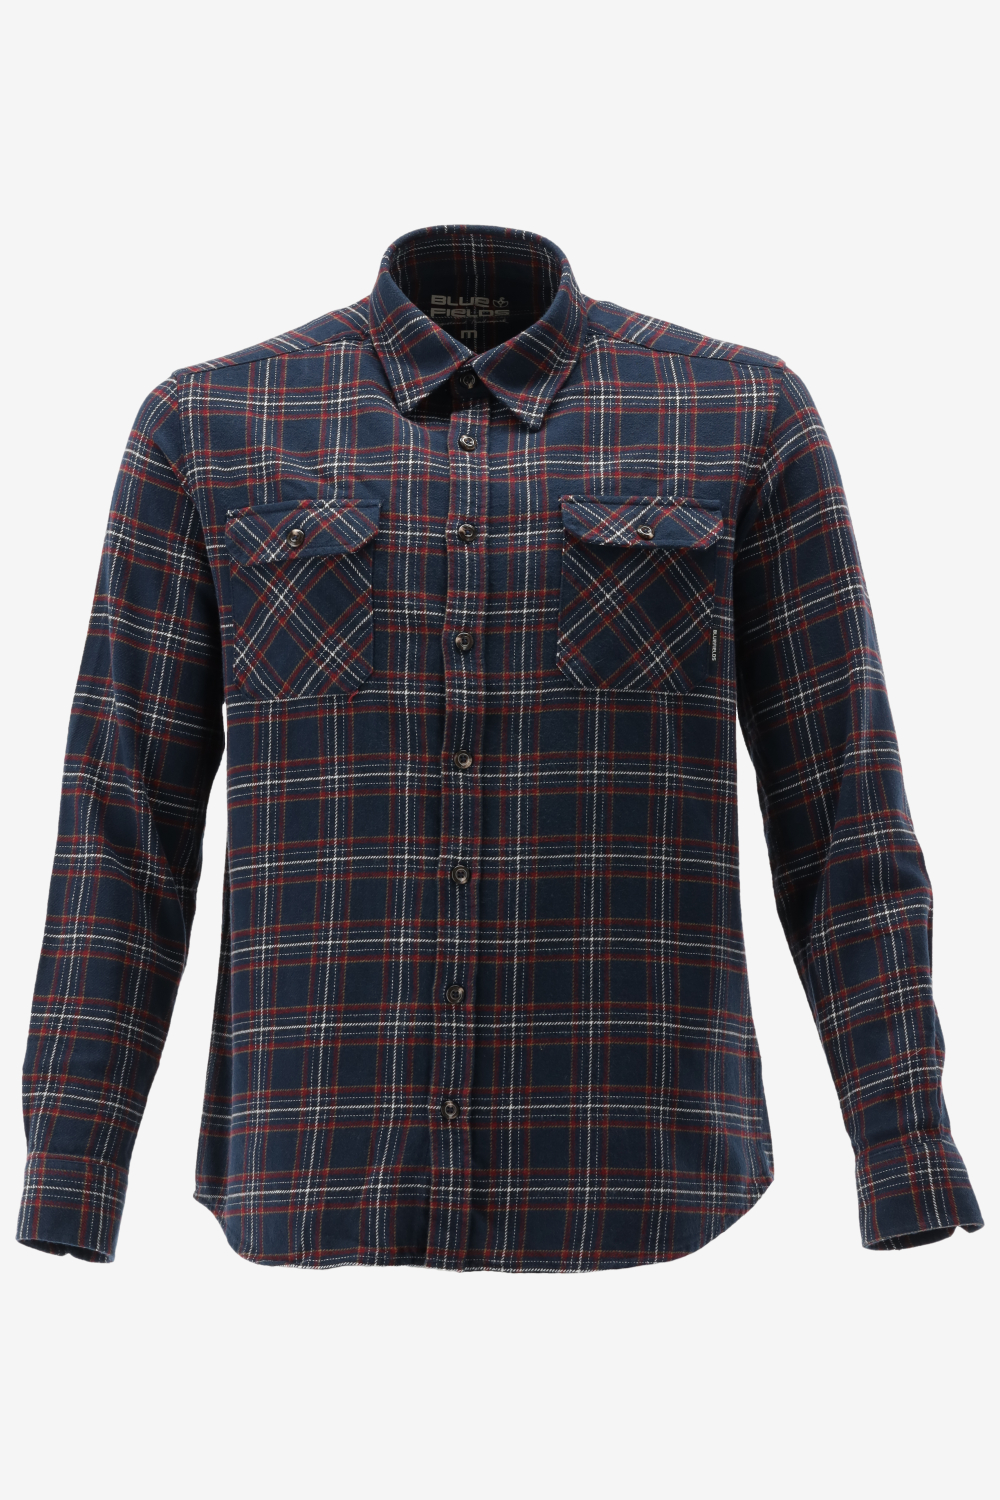 BlueFields Overhemd Twill Overhemd Met Klepzakken 21542020 5947 Mannen Maat - XL